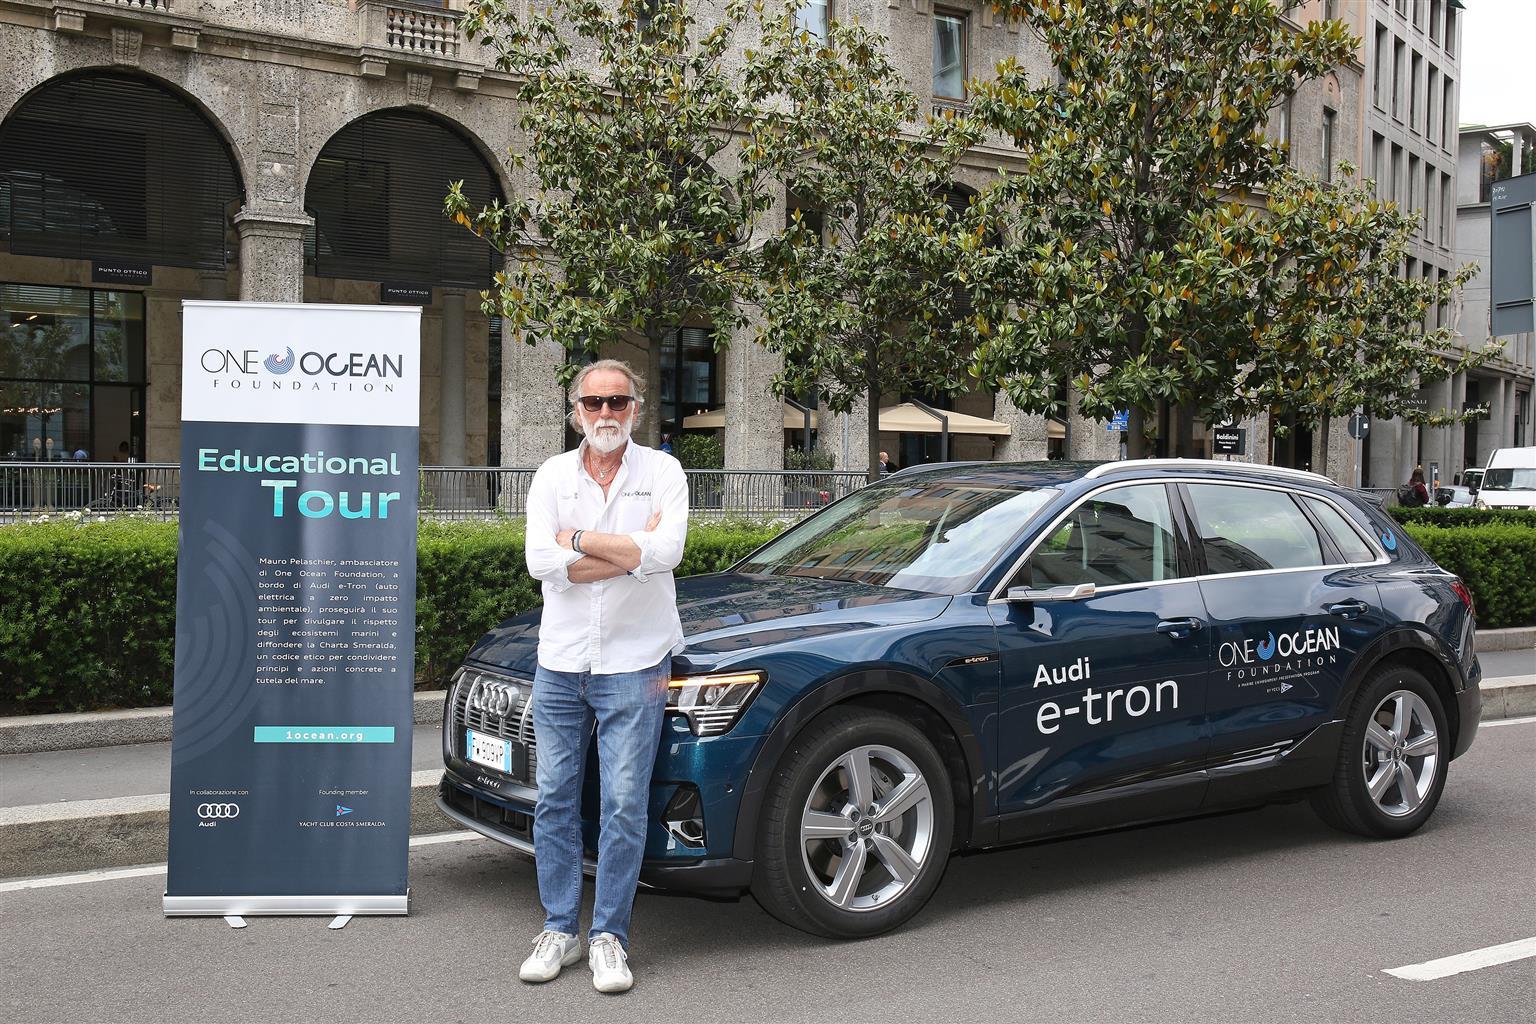 Nei circoli nautici italiani il One Ocean Educational Tour targato Audi